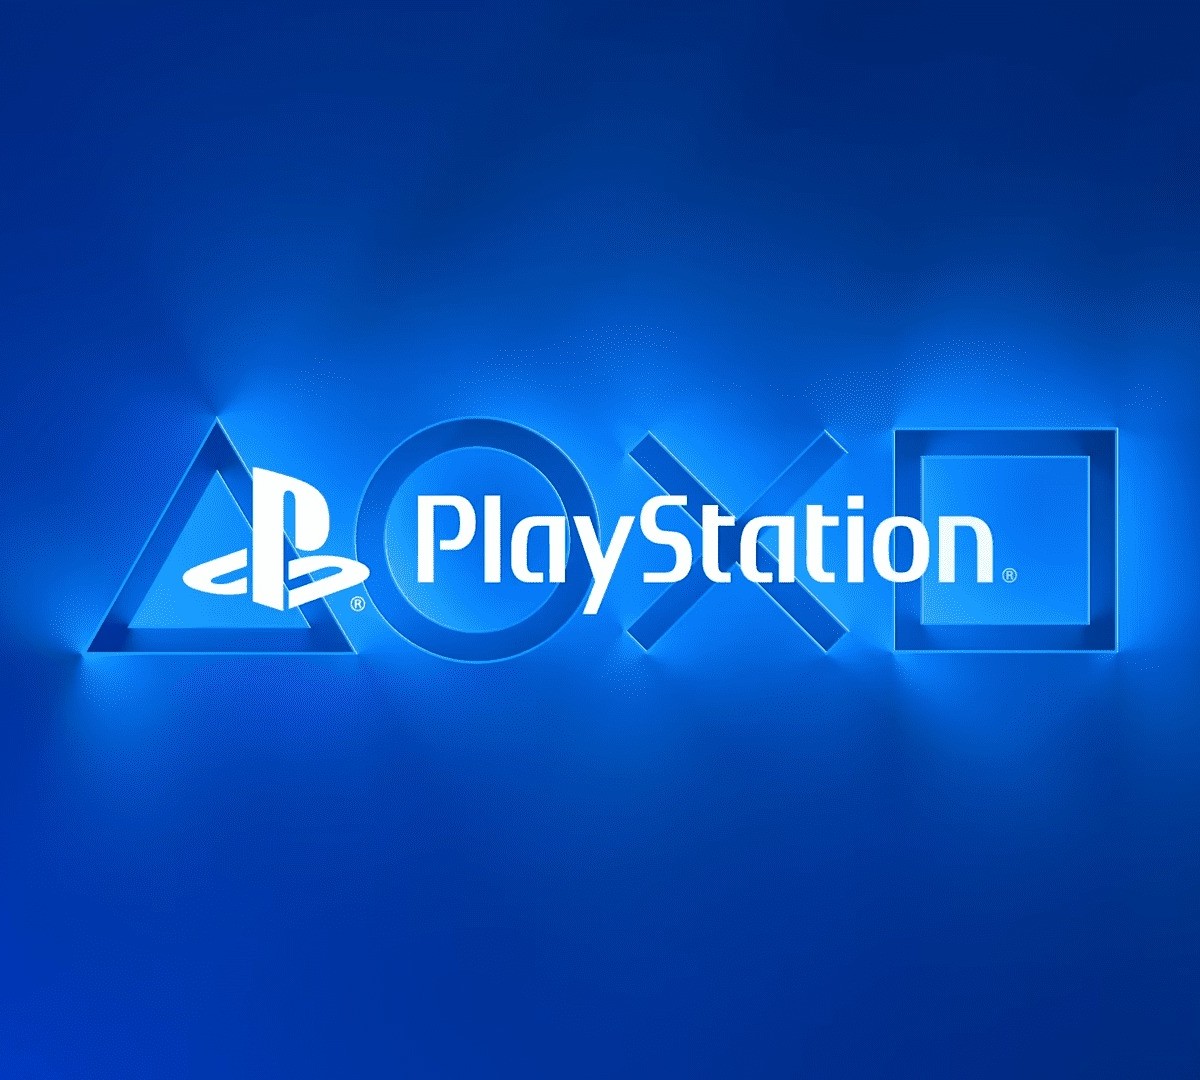 PlayStation anuncia evento State of Play para esta quinta-feira (14) 